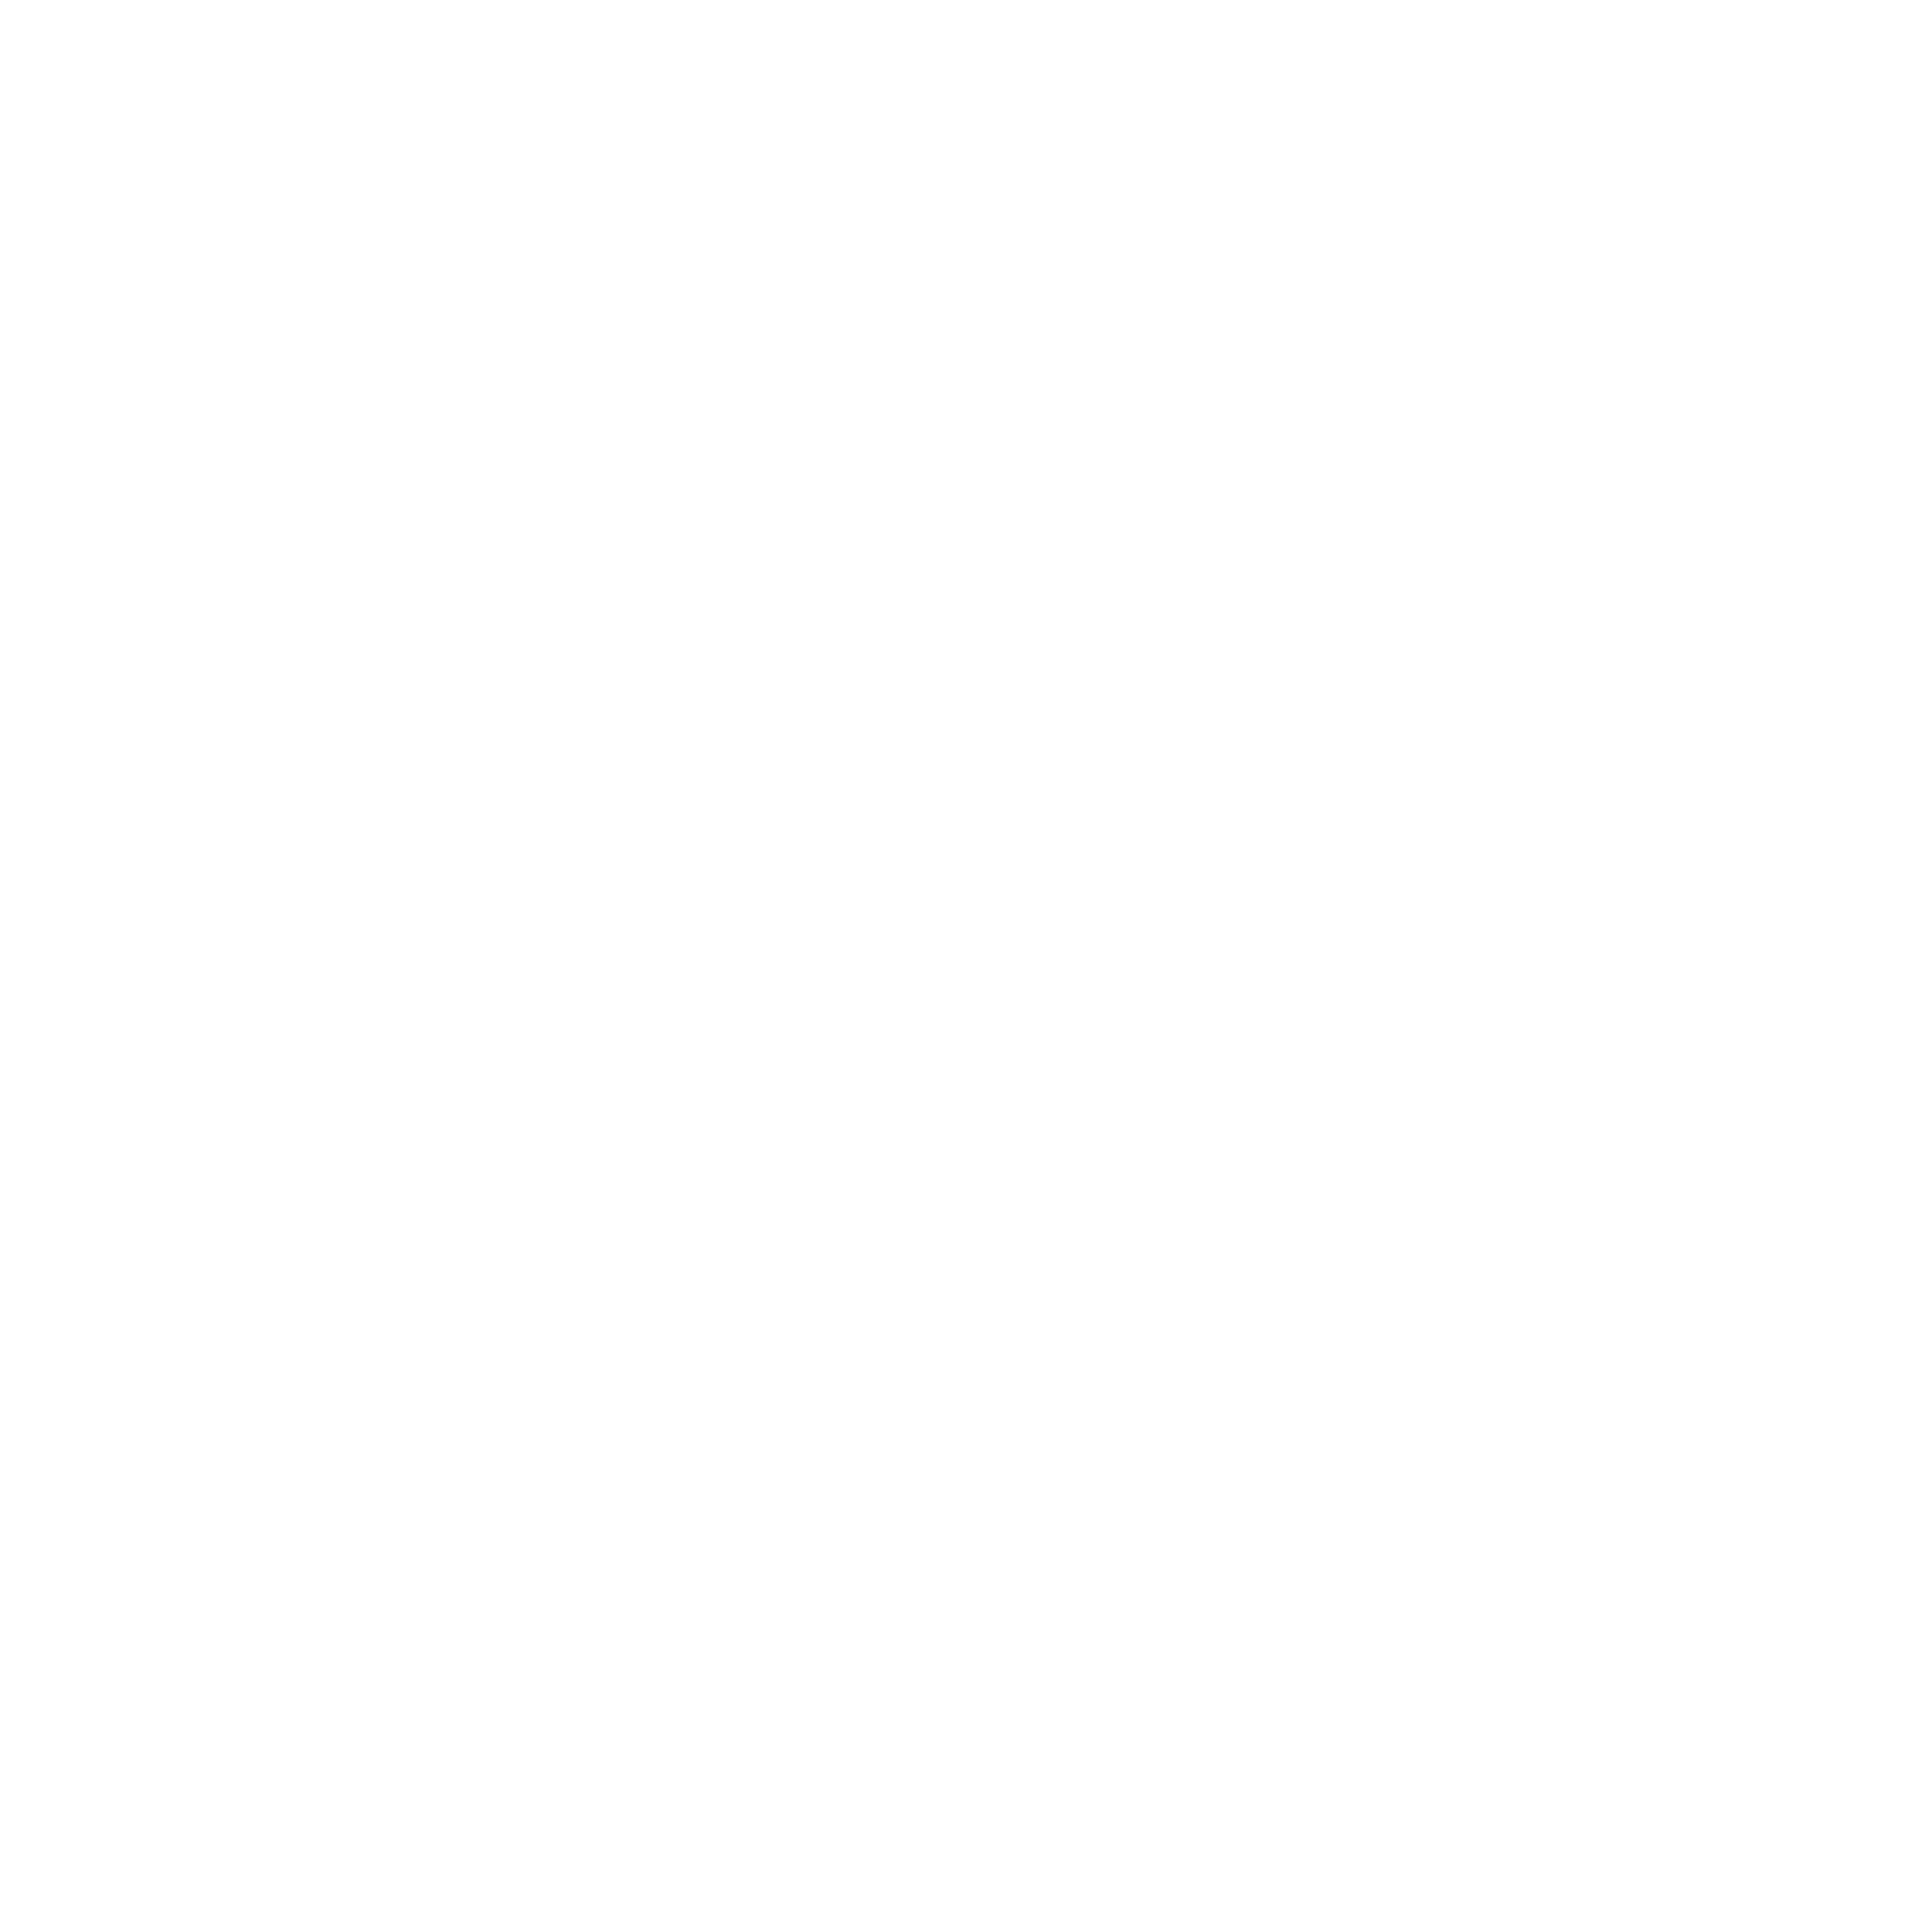 2019 Official SAFILM Selection Laurels_wht.png